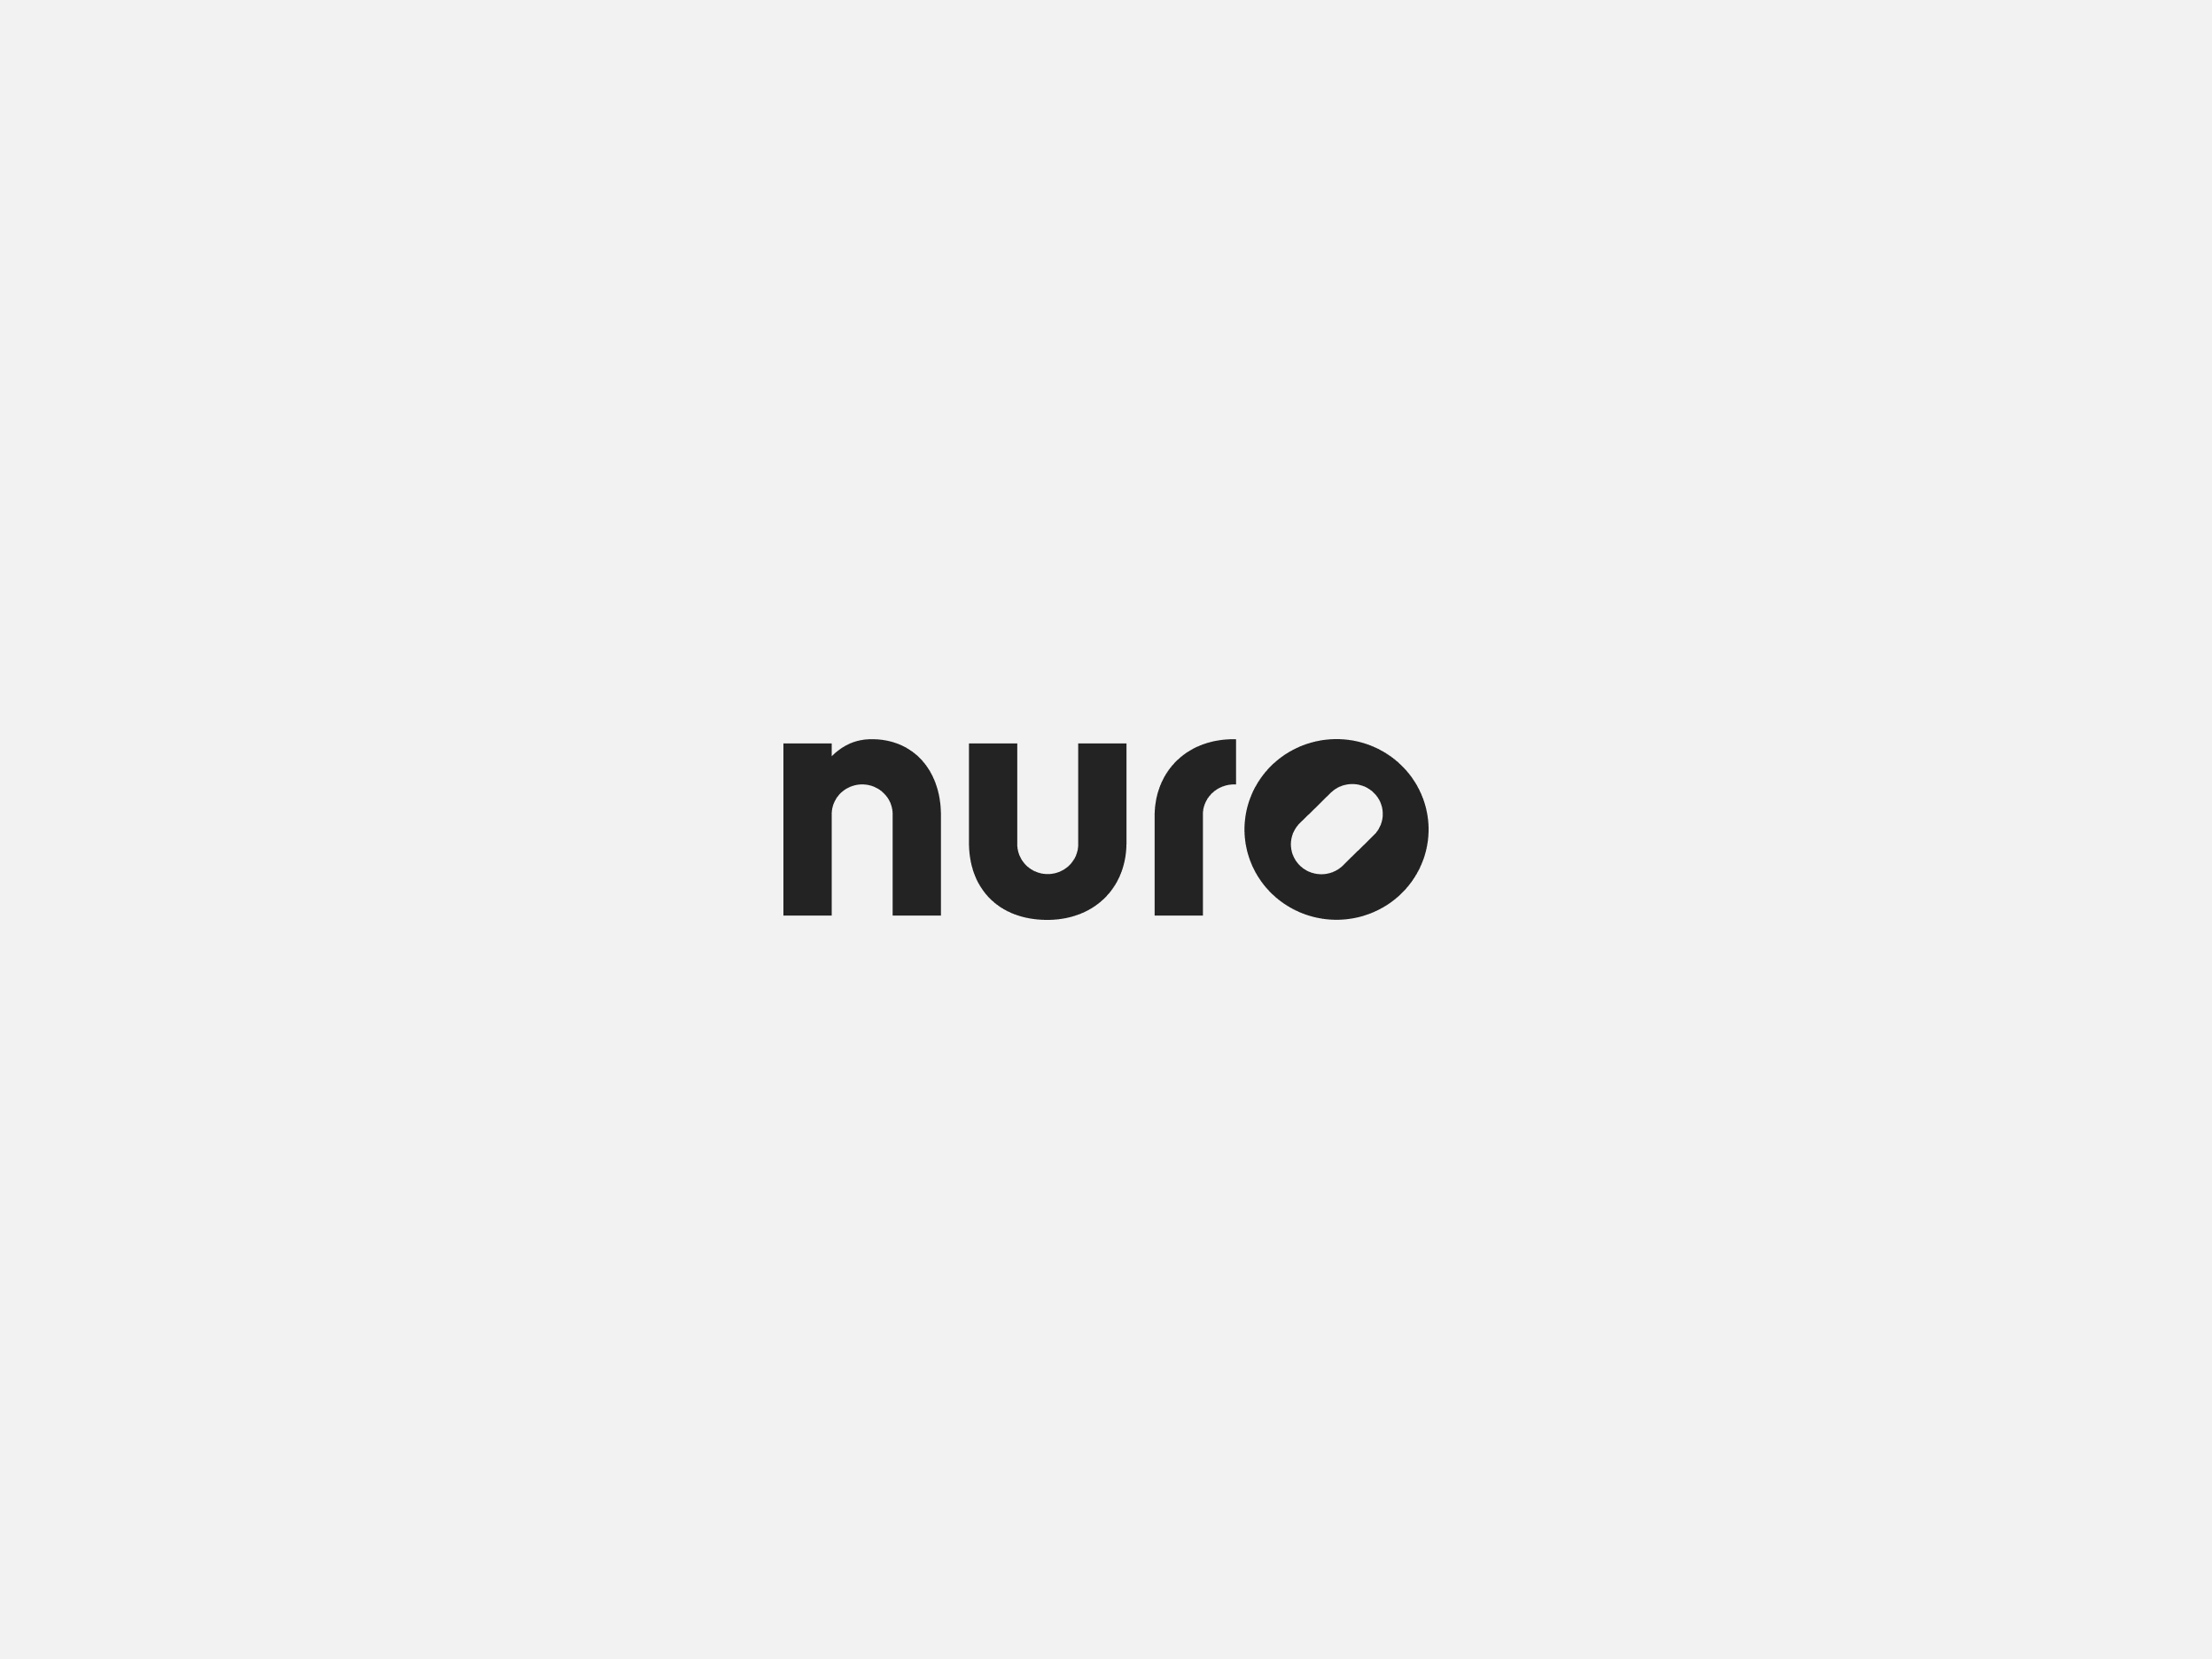 Nuro Rebrand